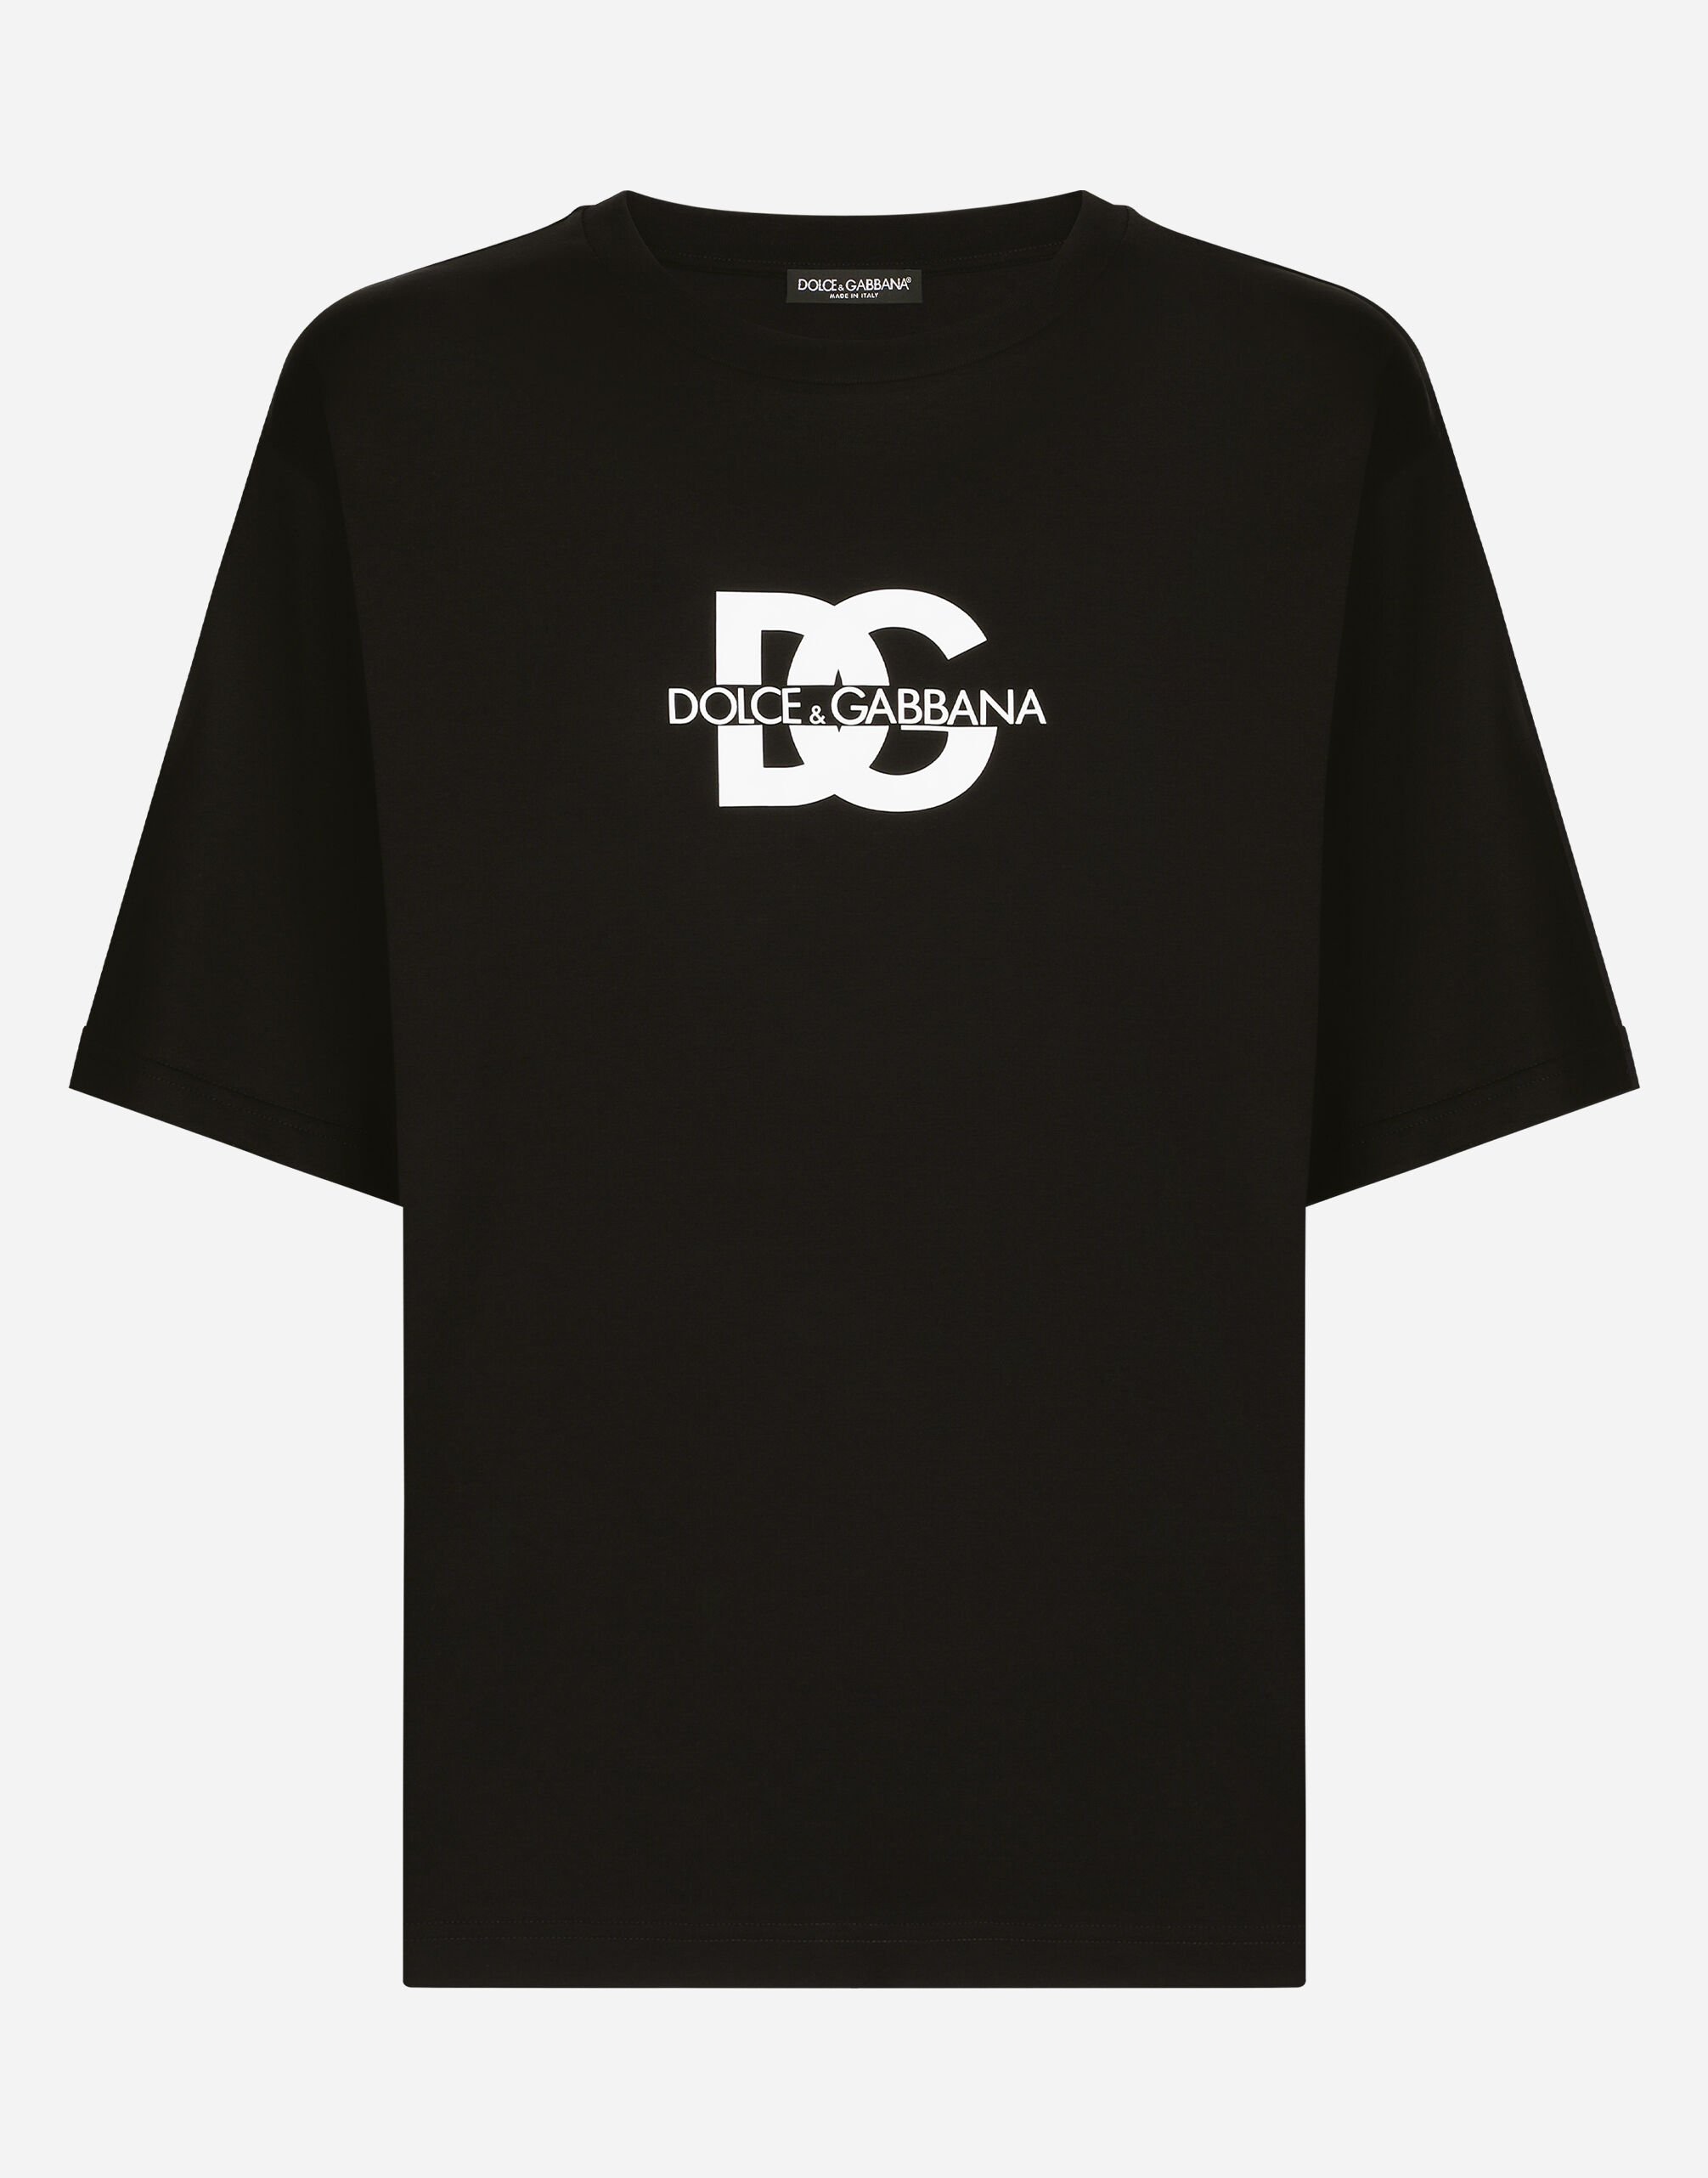 Dolce&Gabbana Short-sleeved T-shirt with DG logo print Black G9ZY5LHULR0